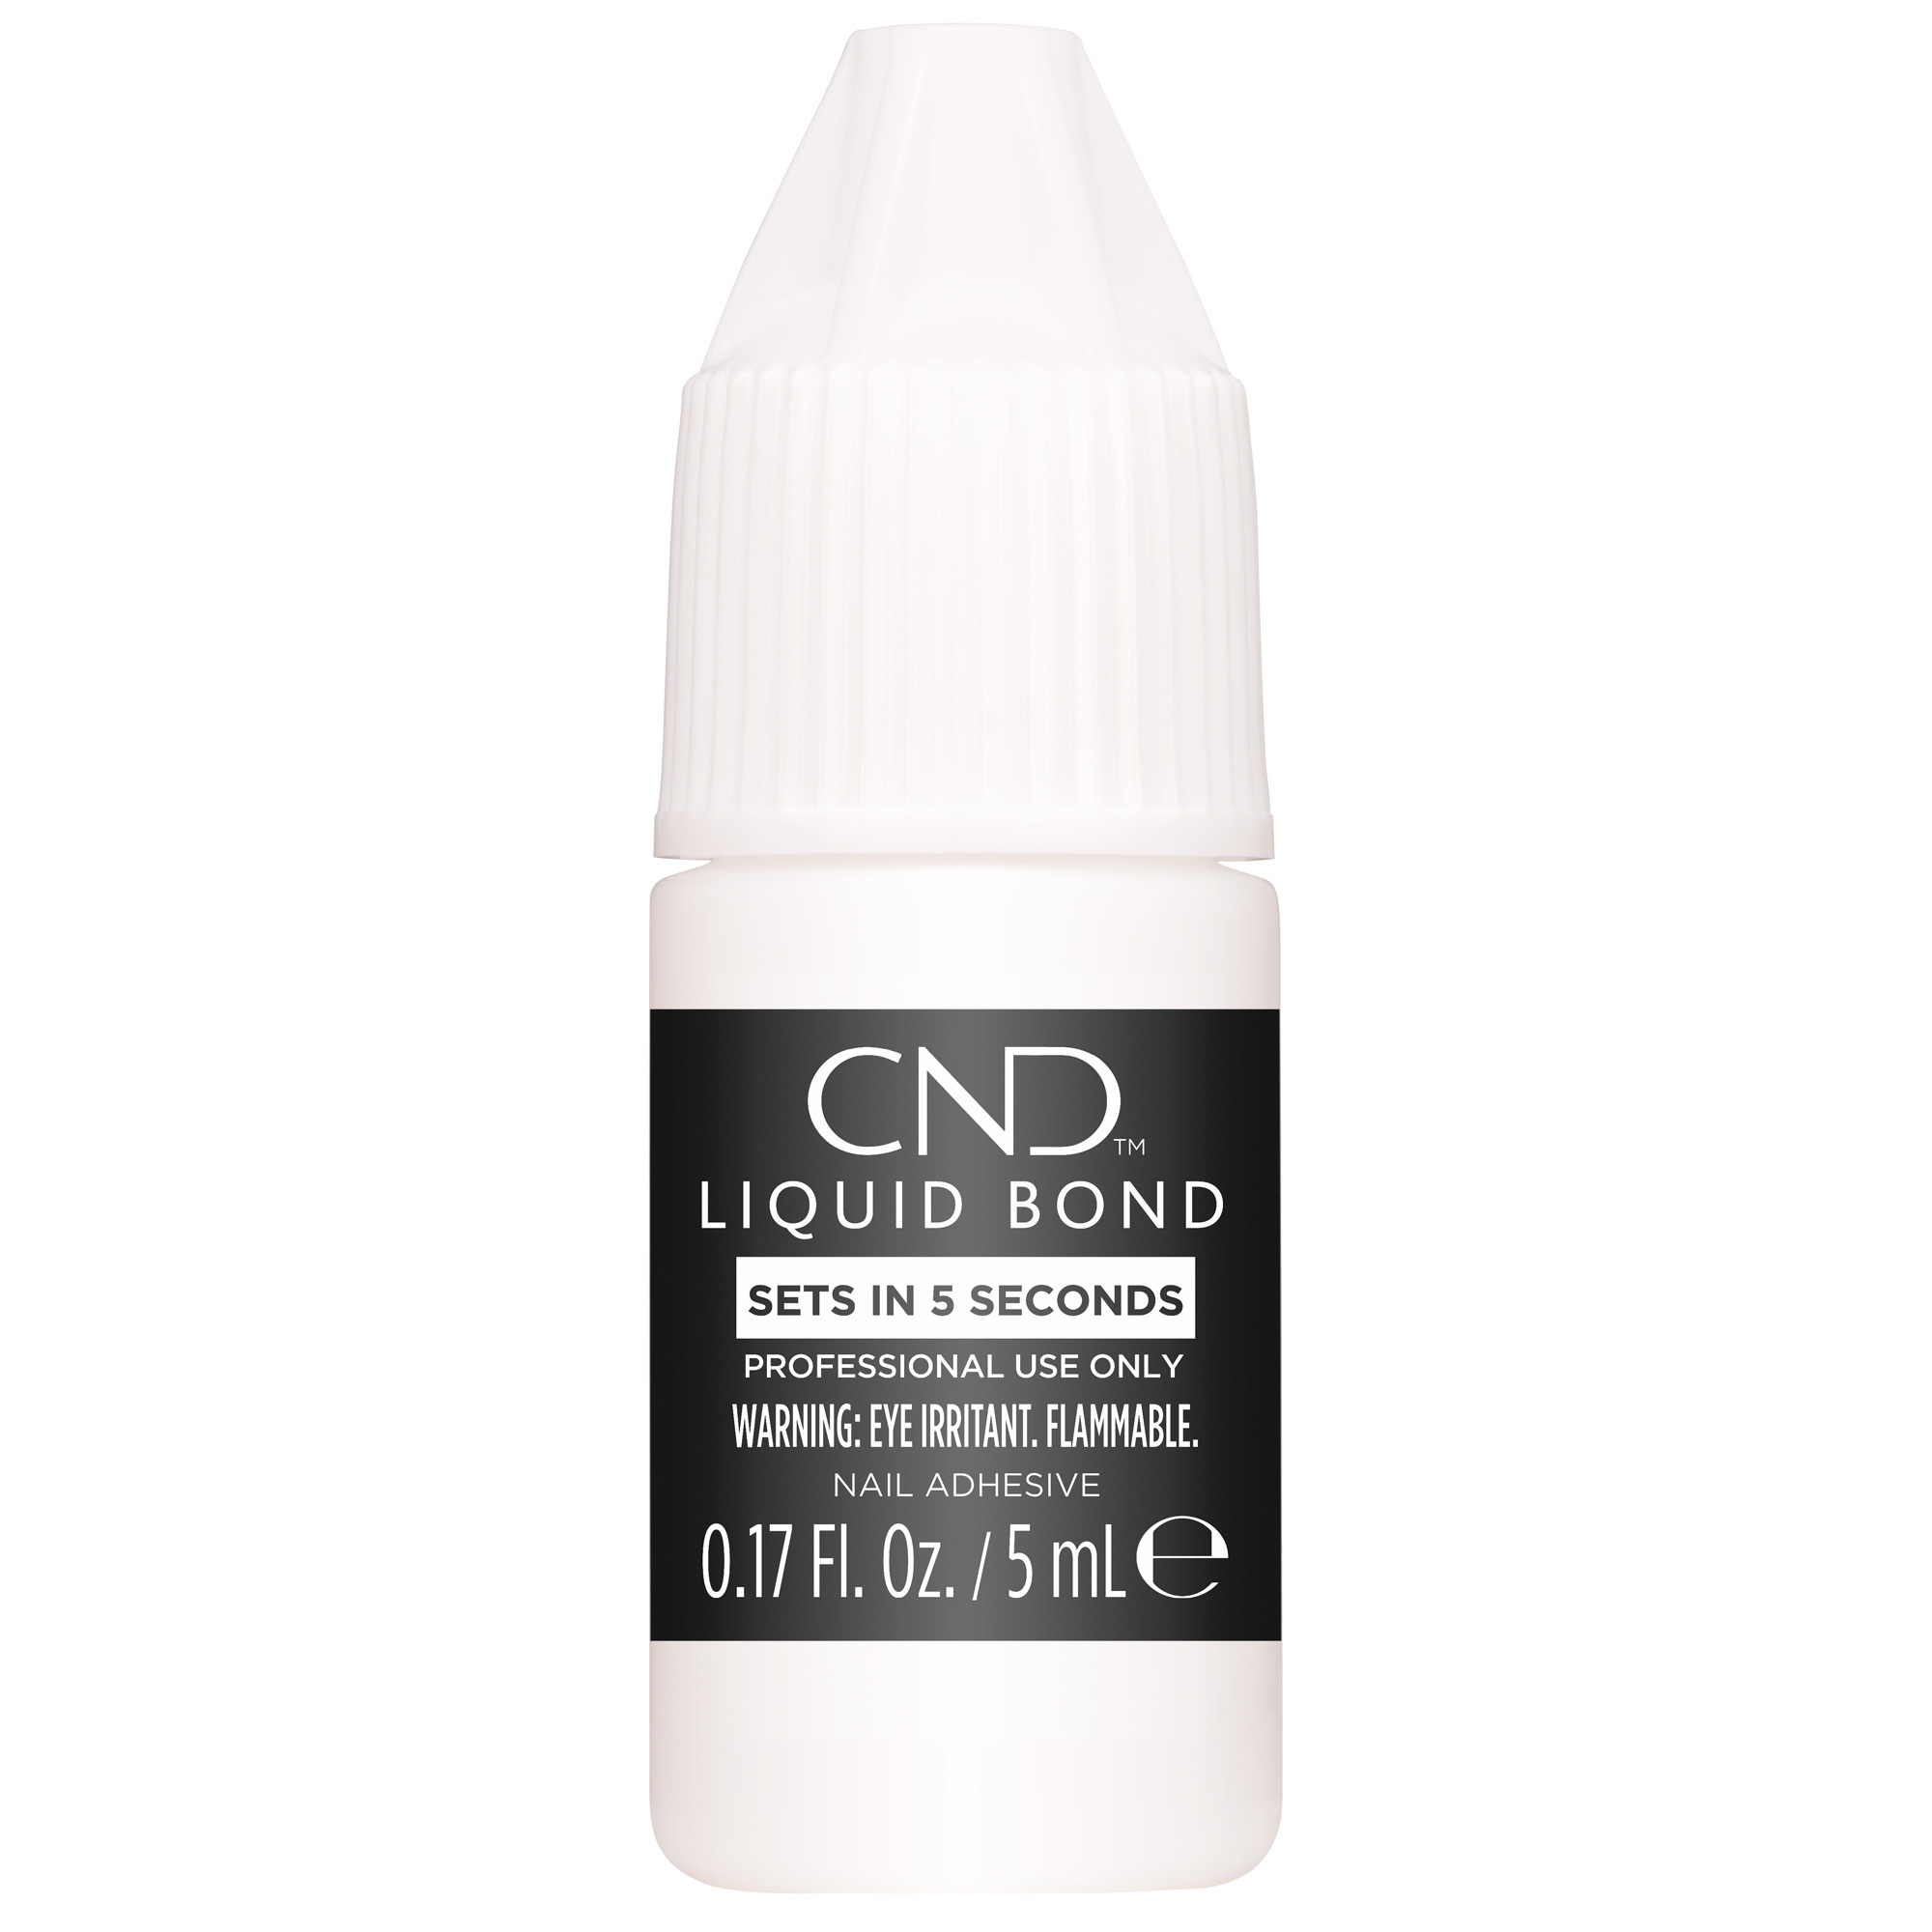 CND Liquid Bond Nail Adhesive